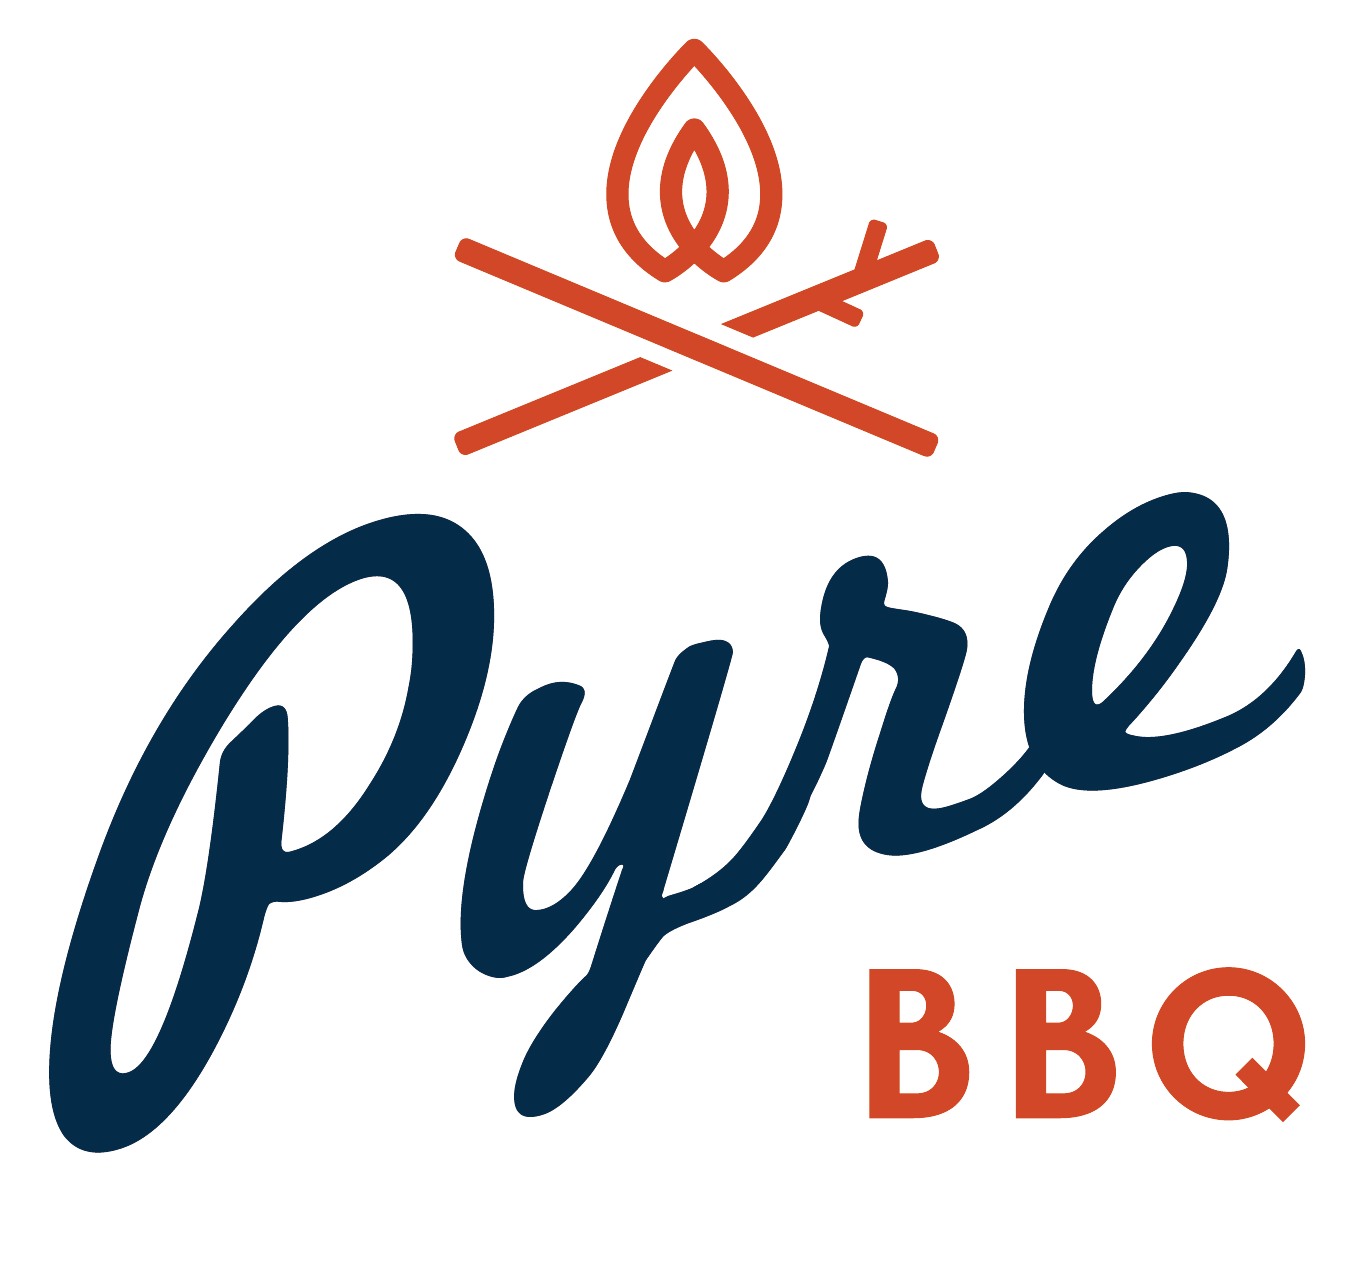 Pyre BBQ logo scroll